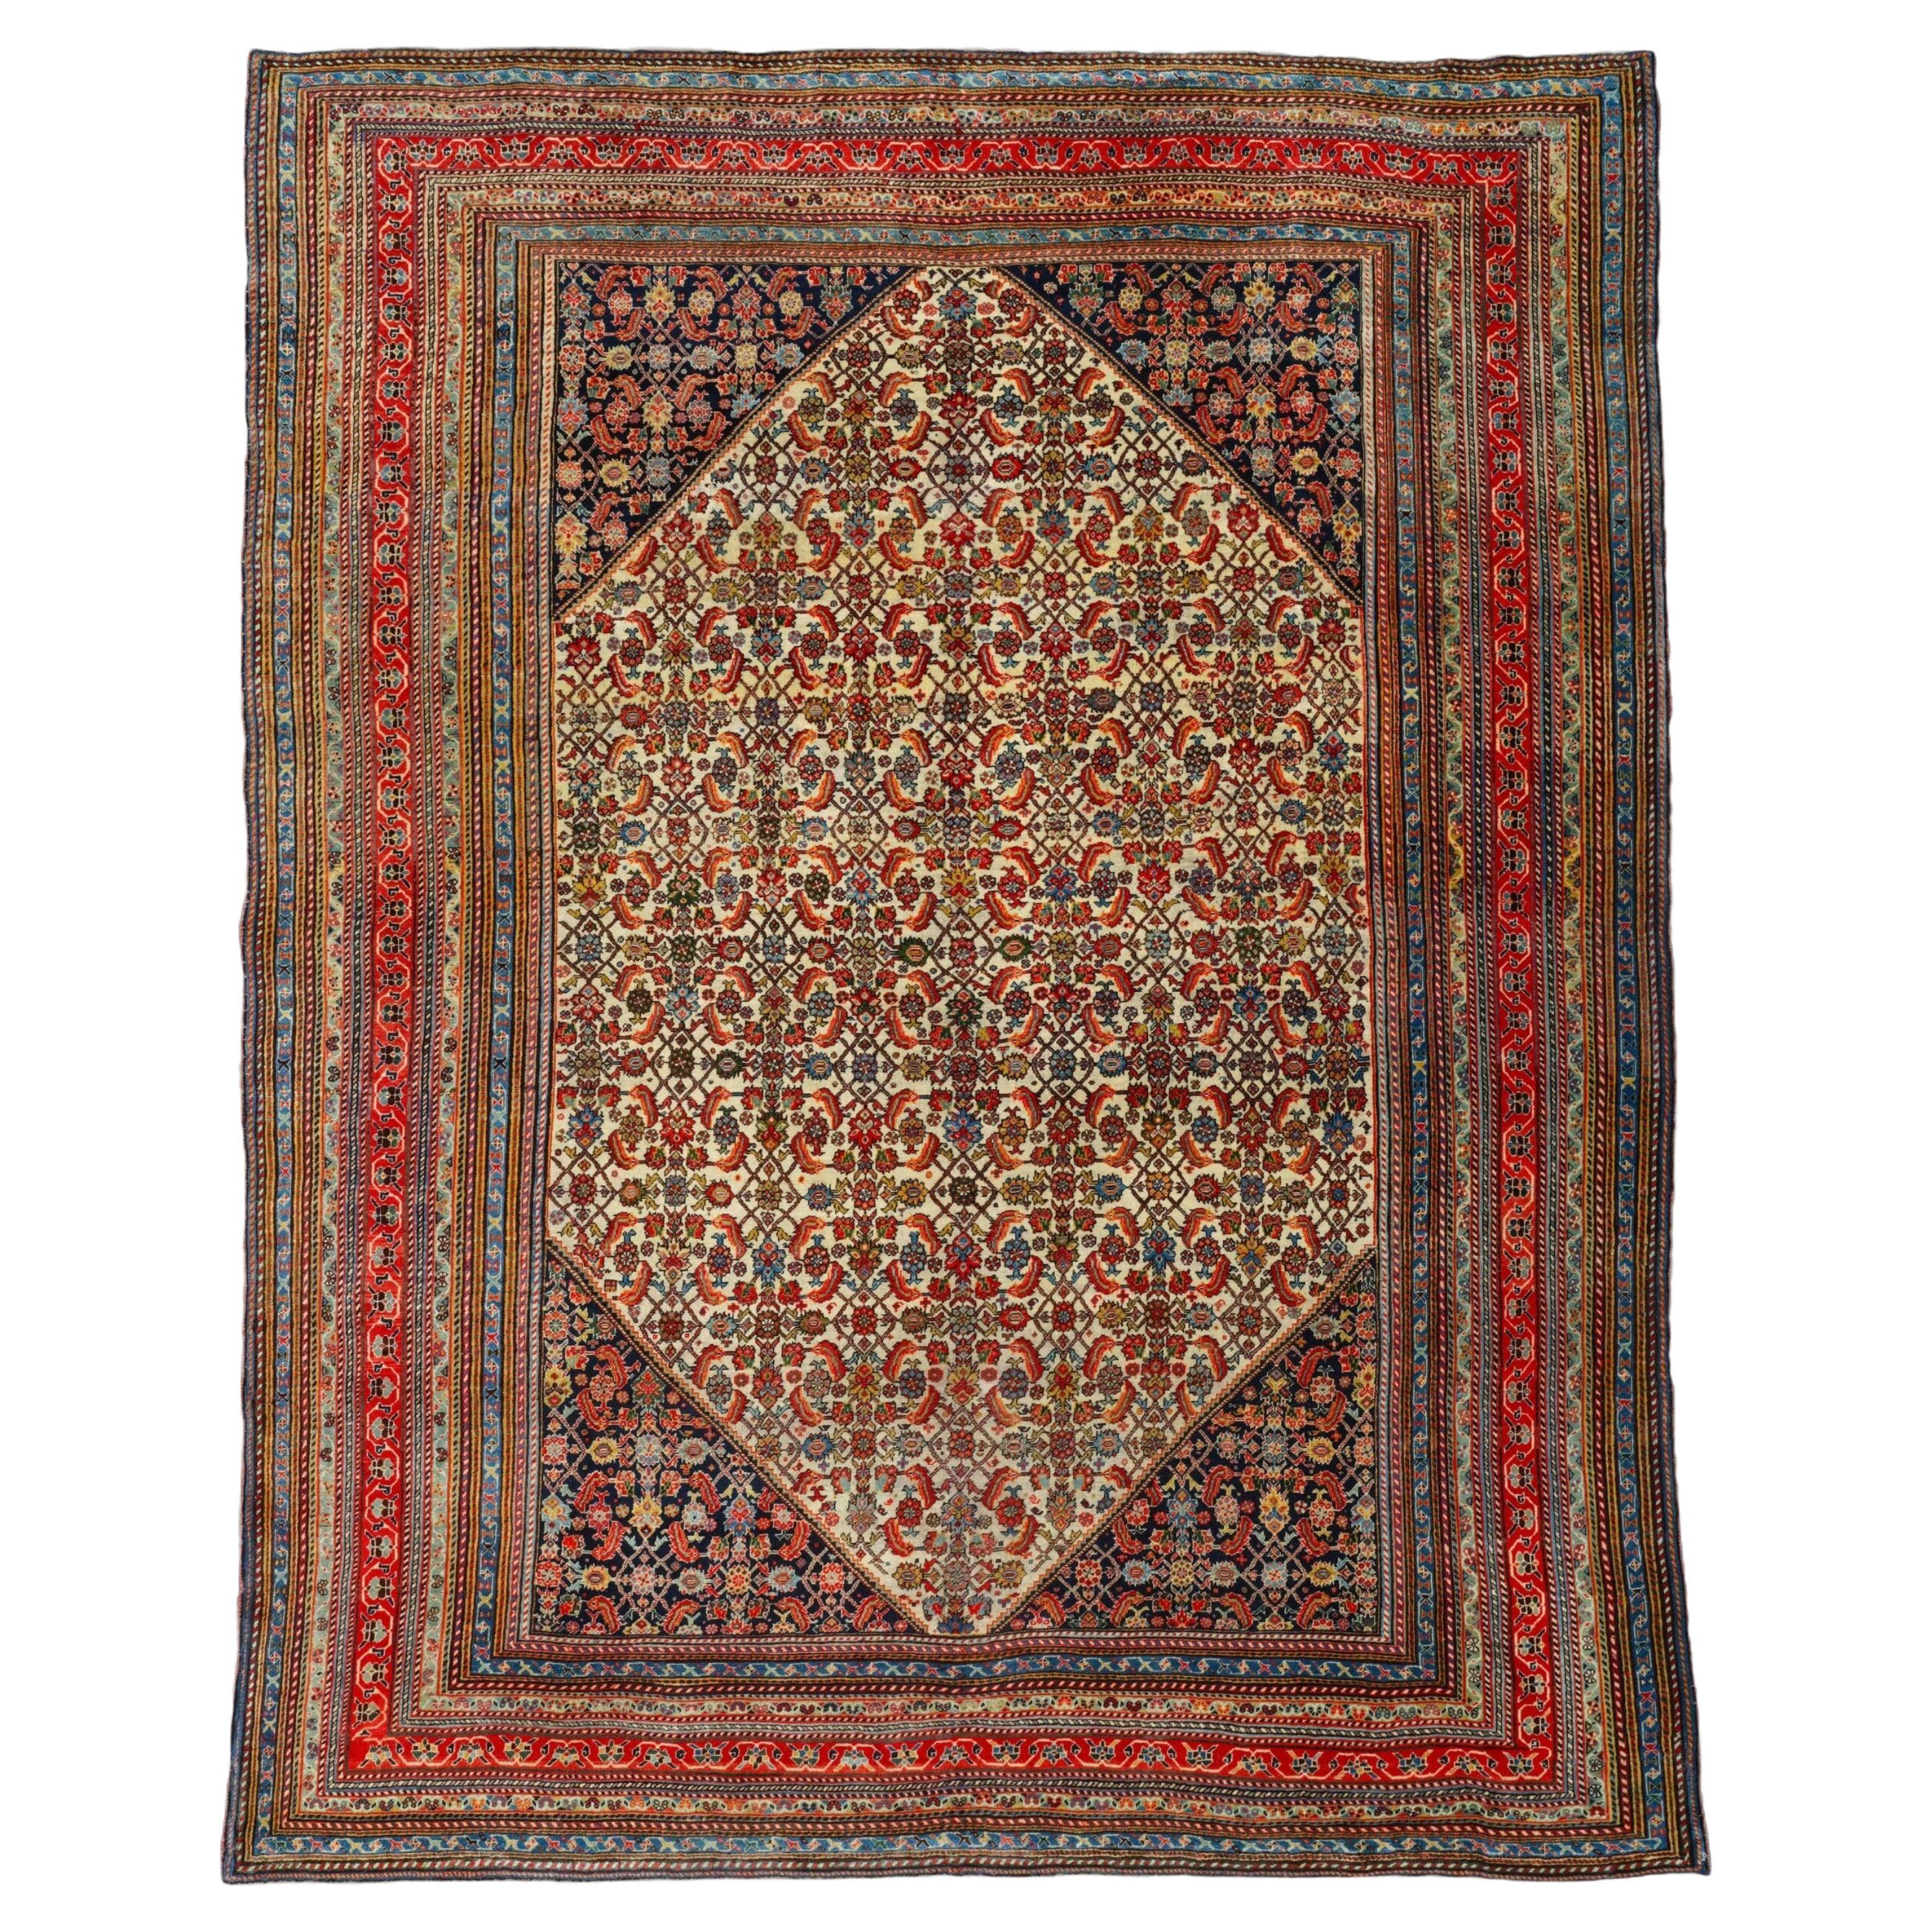 Antique Kaskhai Rug - Late 19th Century Silk Weft Kaskhai Rug, Persian Rug For Sale